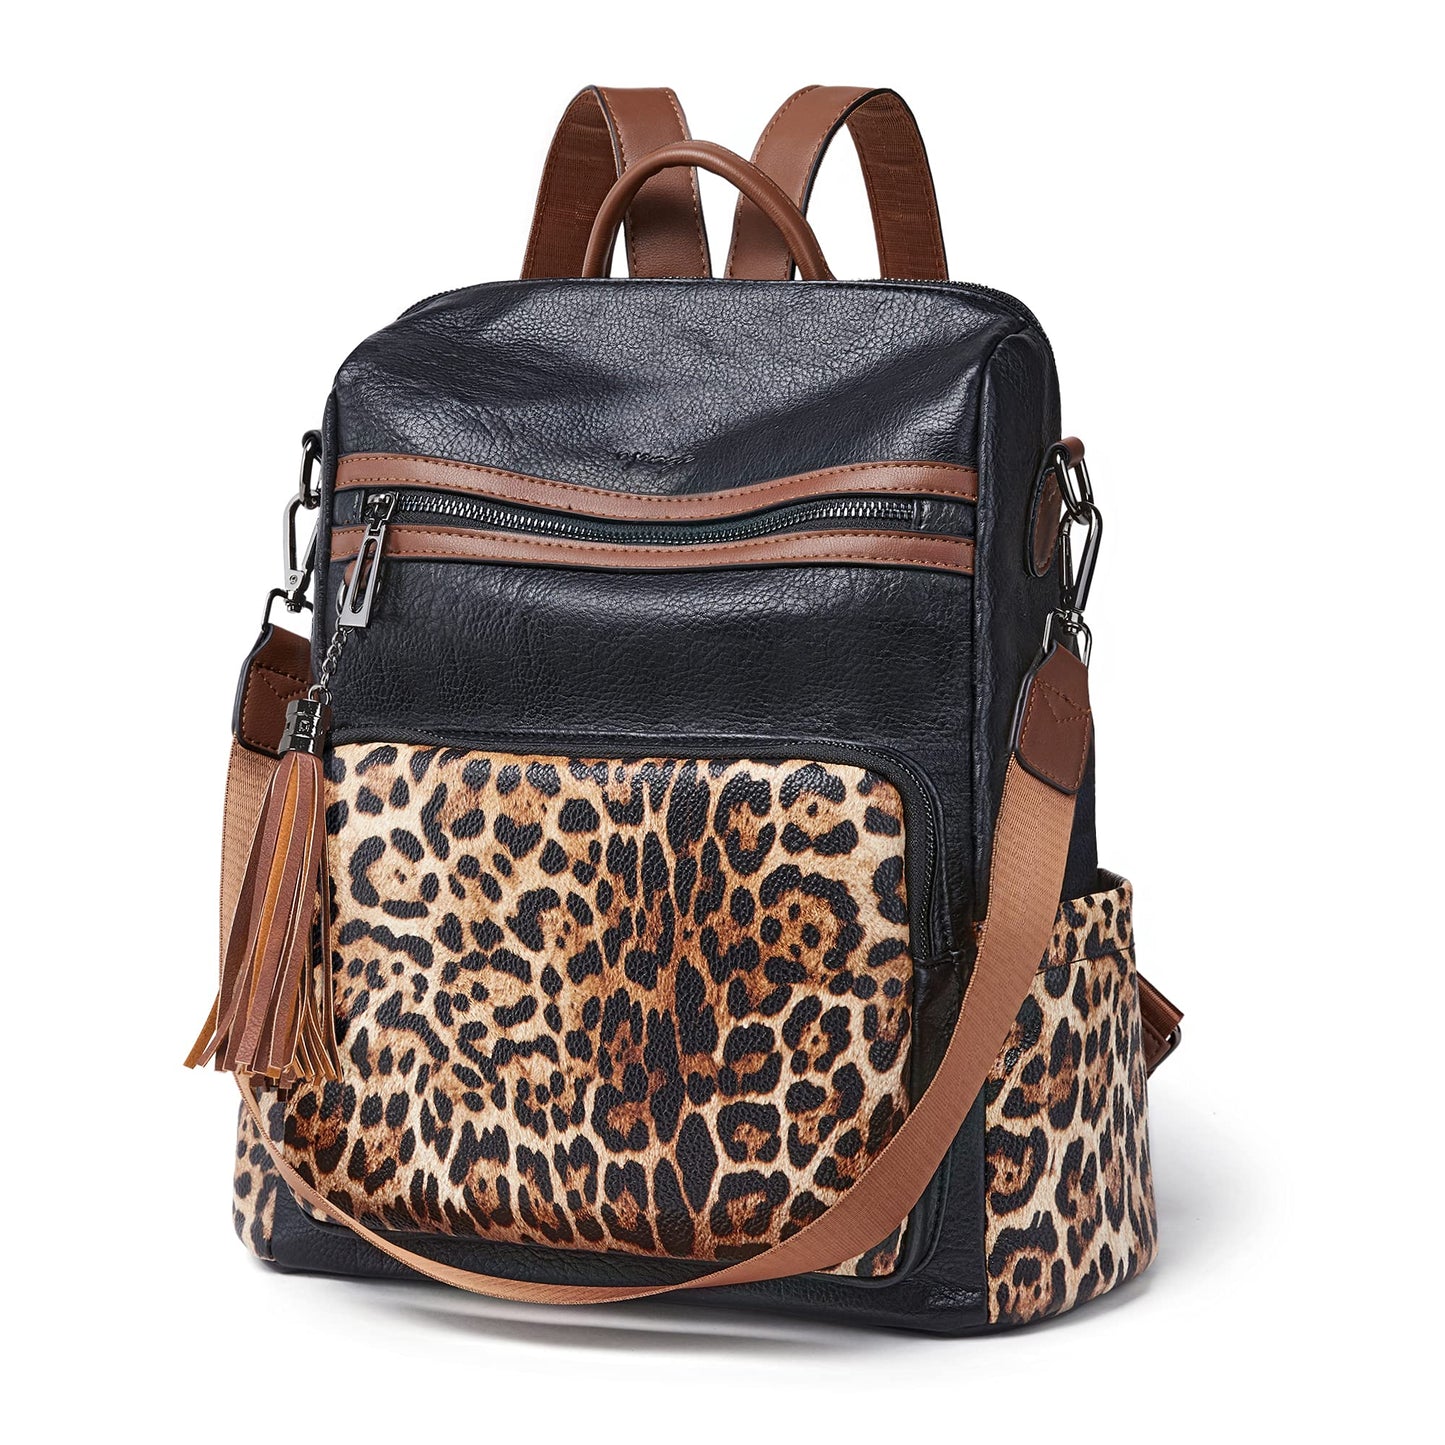 OPAGE Leather Backpack Purse for Women Fashion Tassel Ladies Shoulder Bags Designer Large Travel Backpack Bags